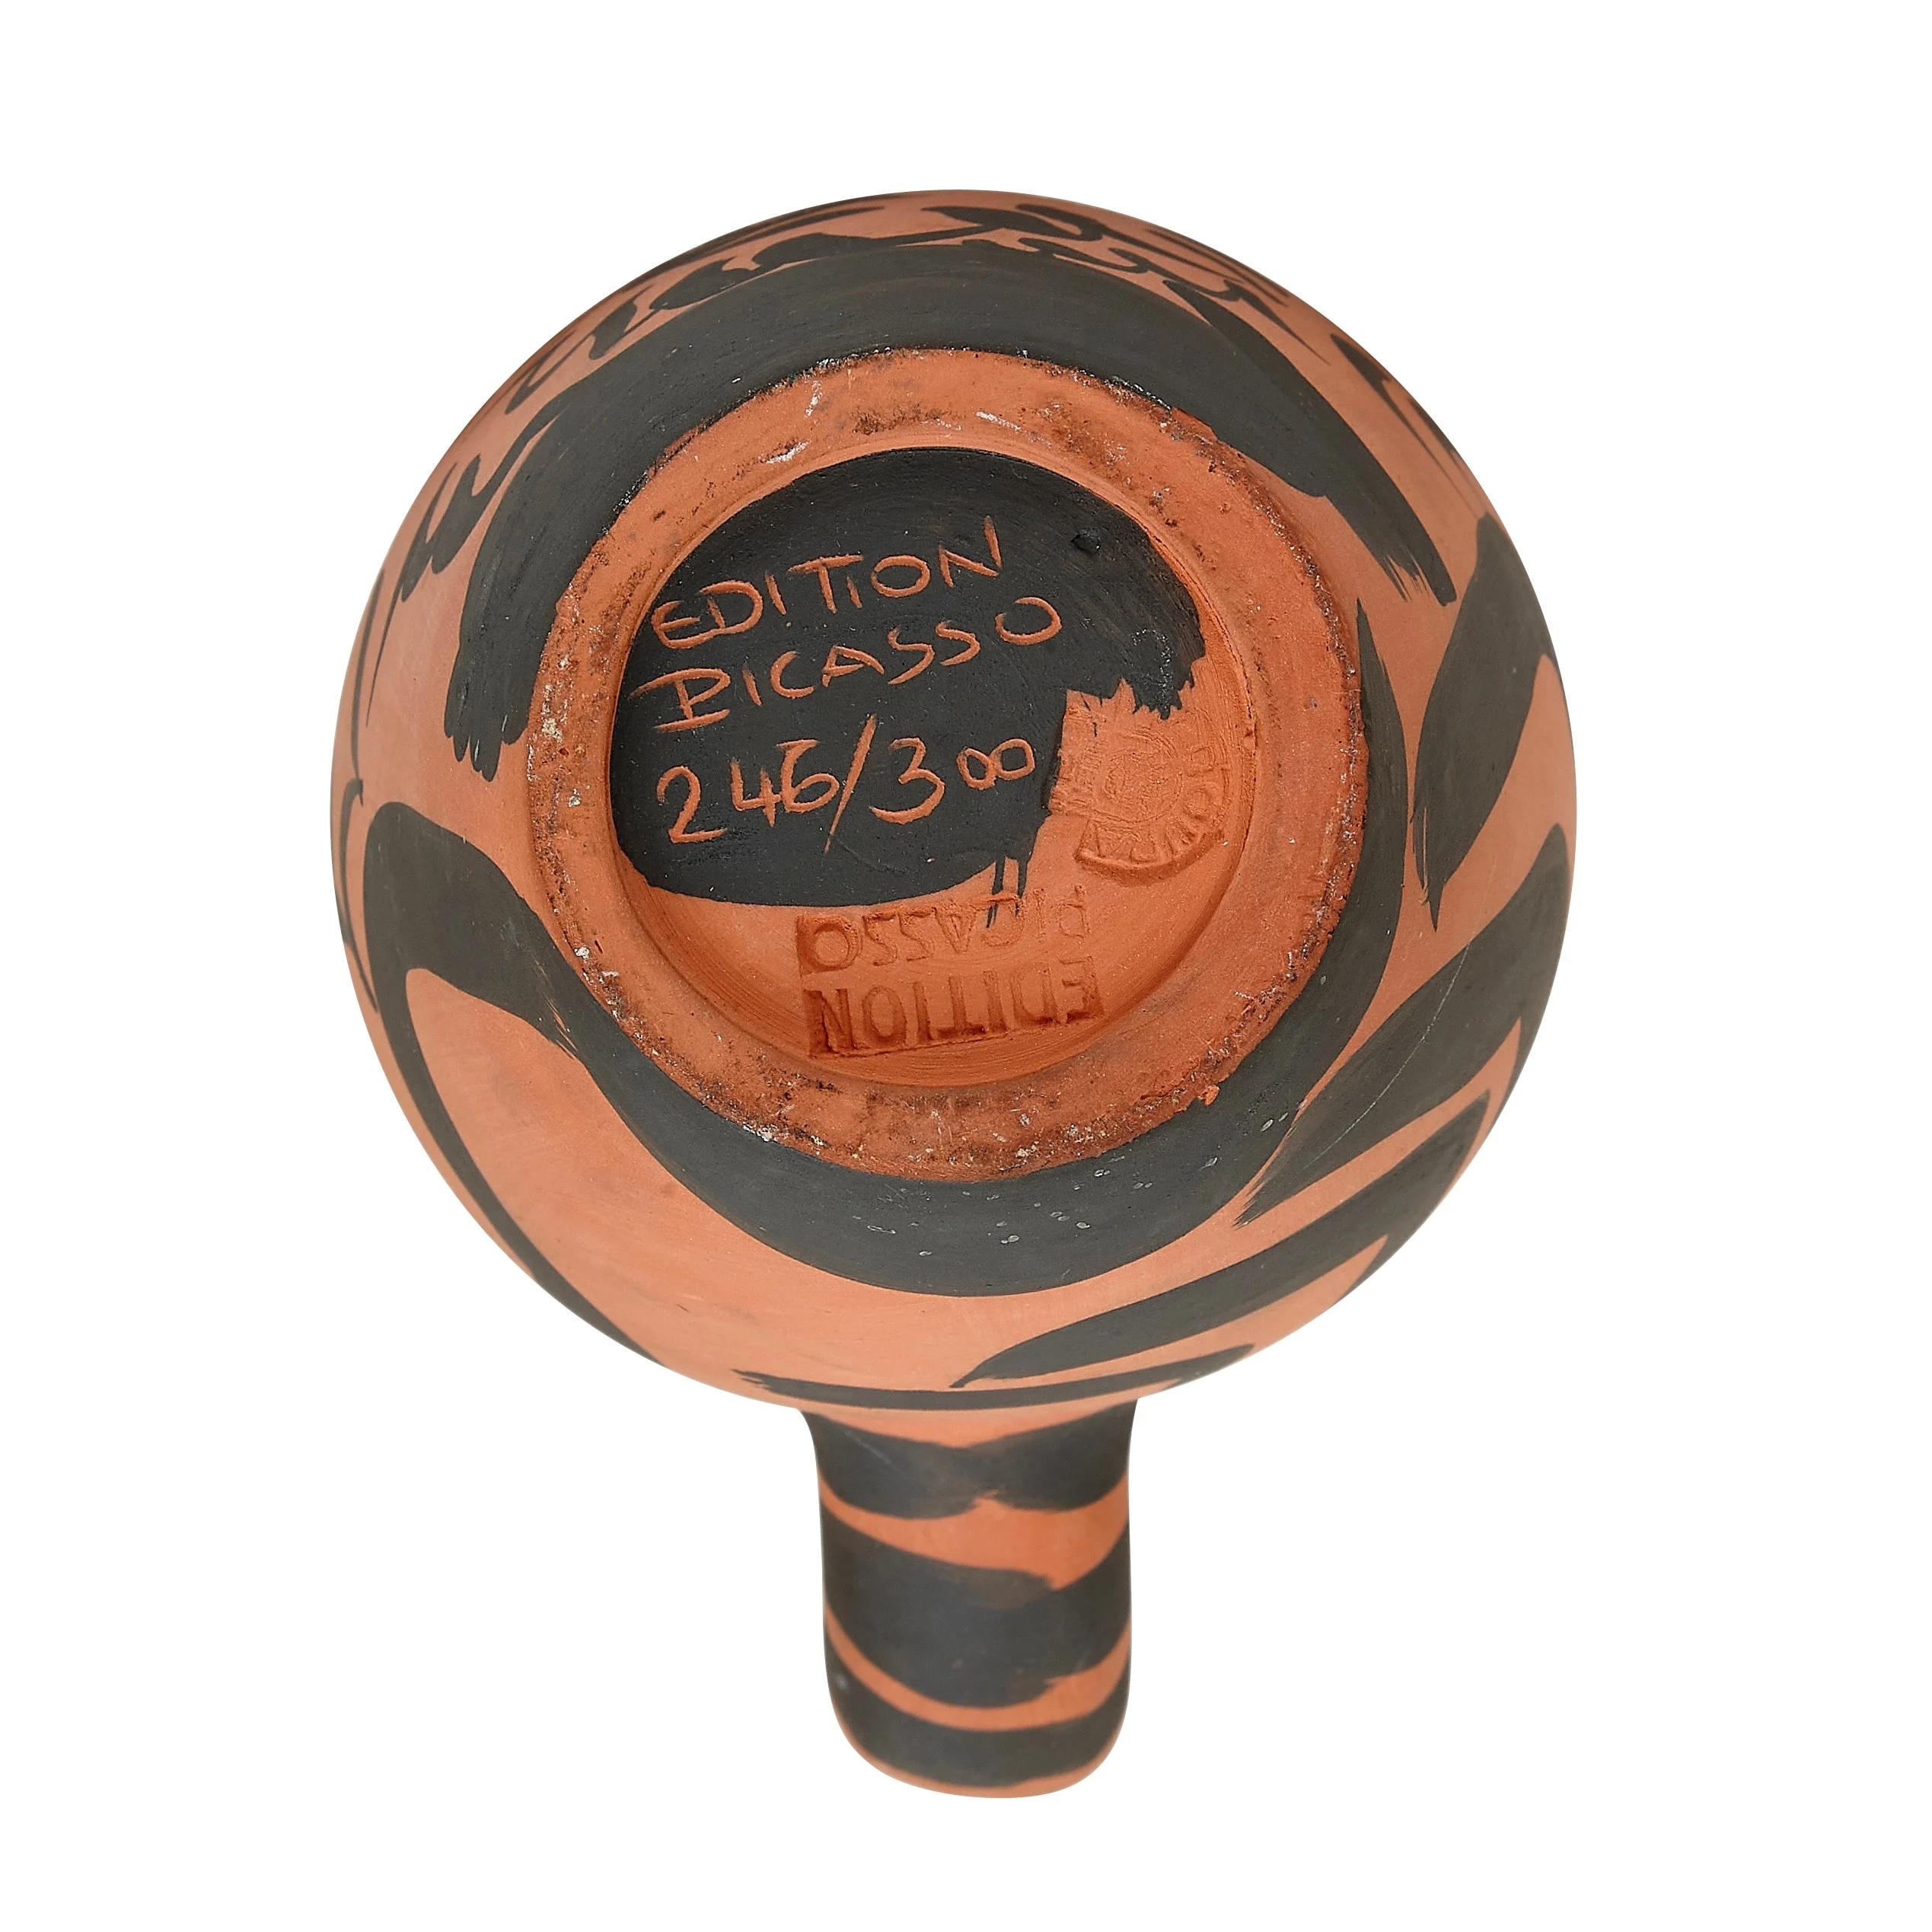 Pablo Picasso Madoura Ceramic Pitcher - Yan Barbu, Ramié 513 For Sale 2